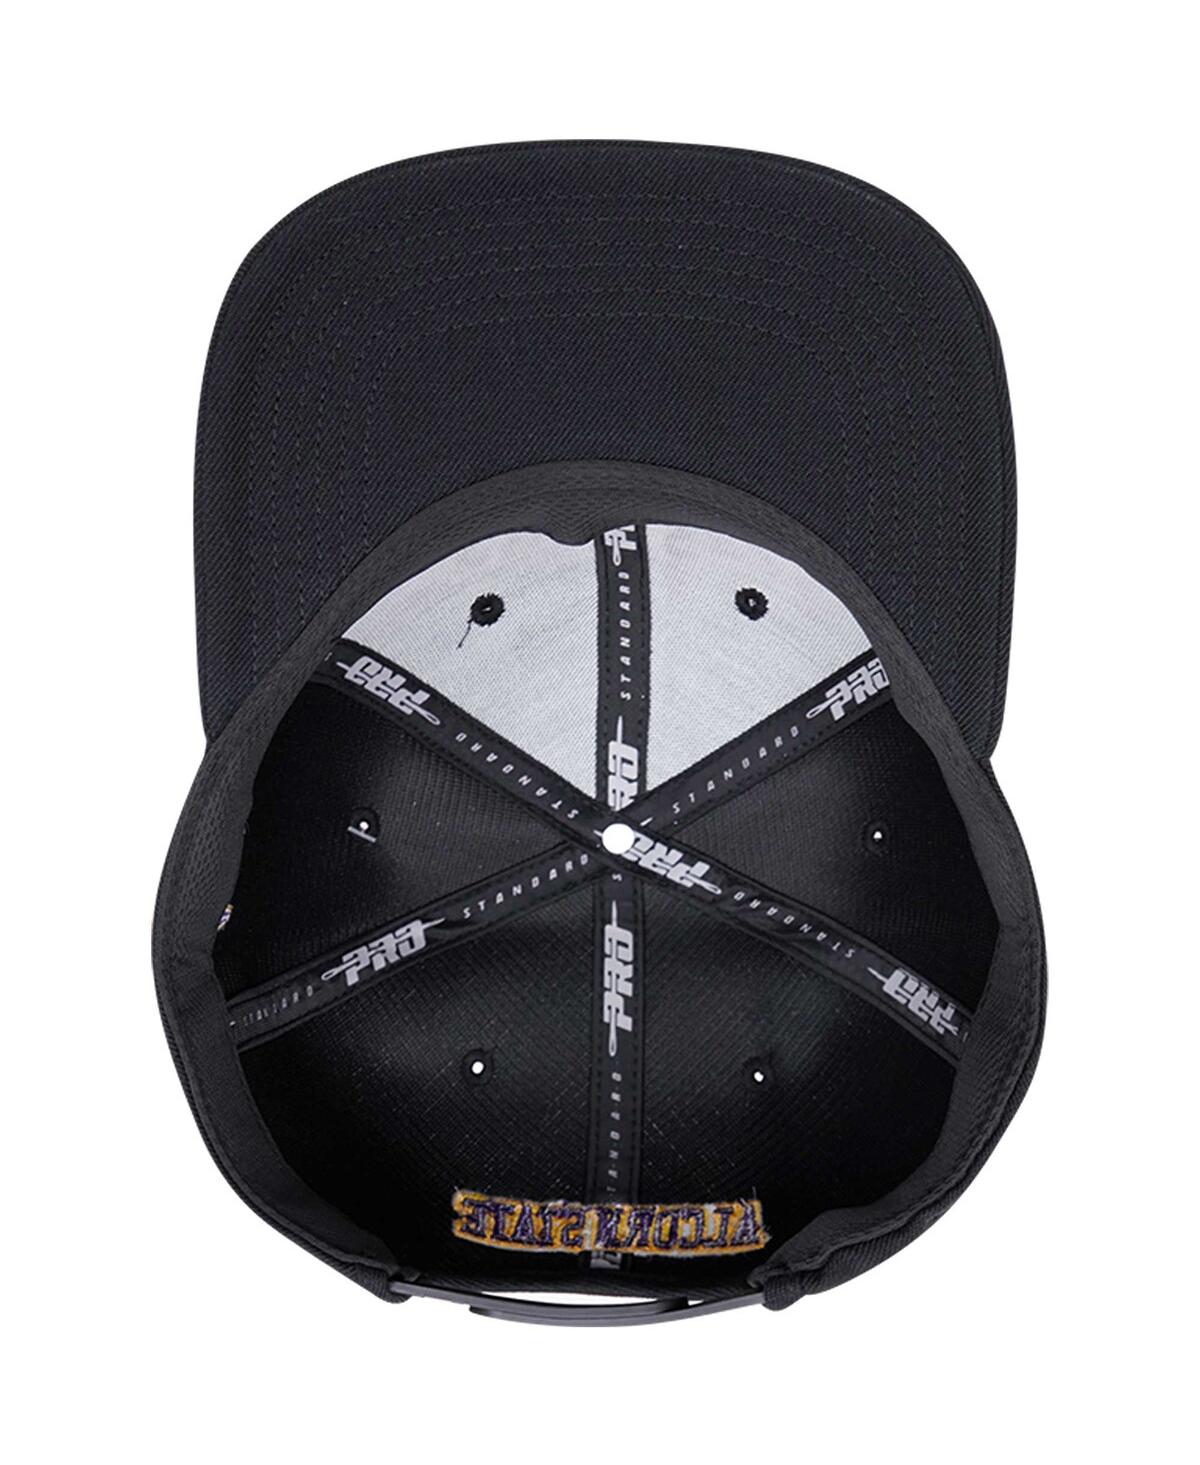 Shop Pro Standard Men's  Black Alcorn State Braves Arch Over Logo Evergreen Snapback Hat